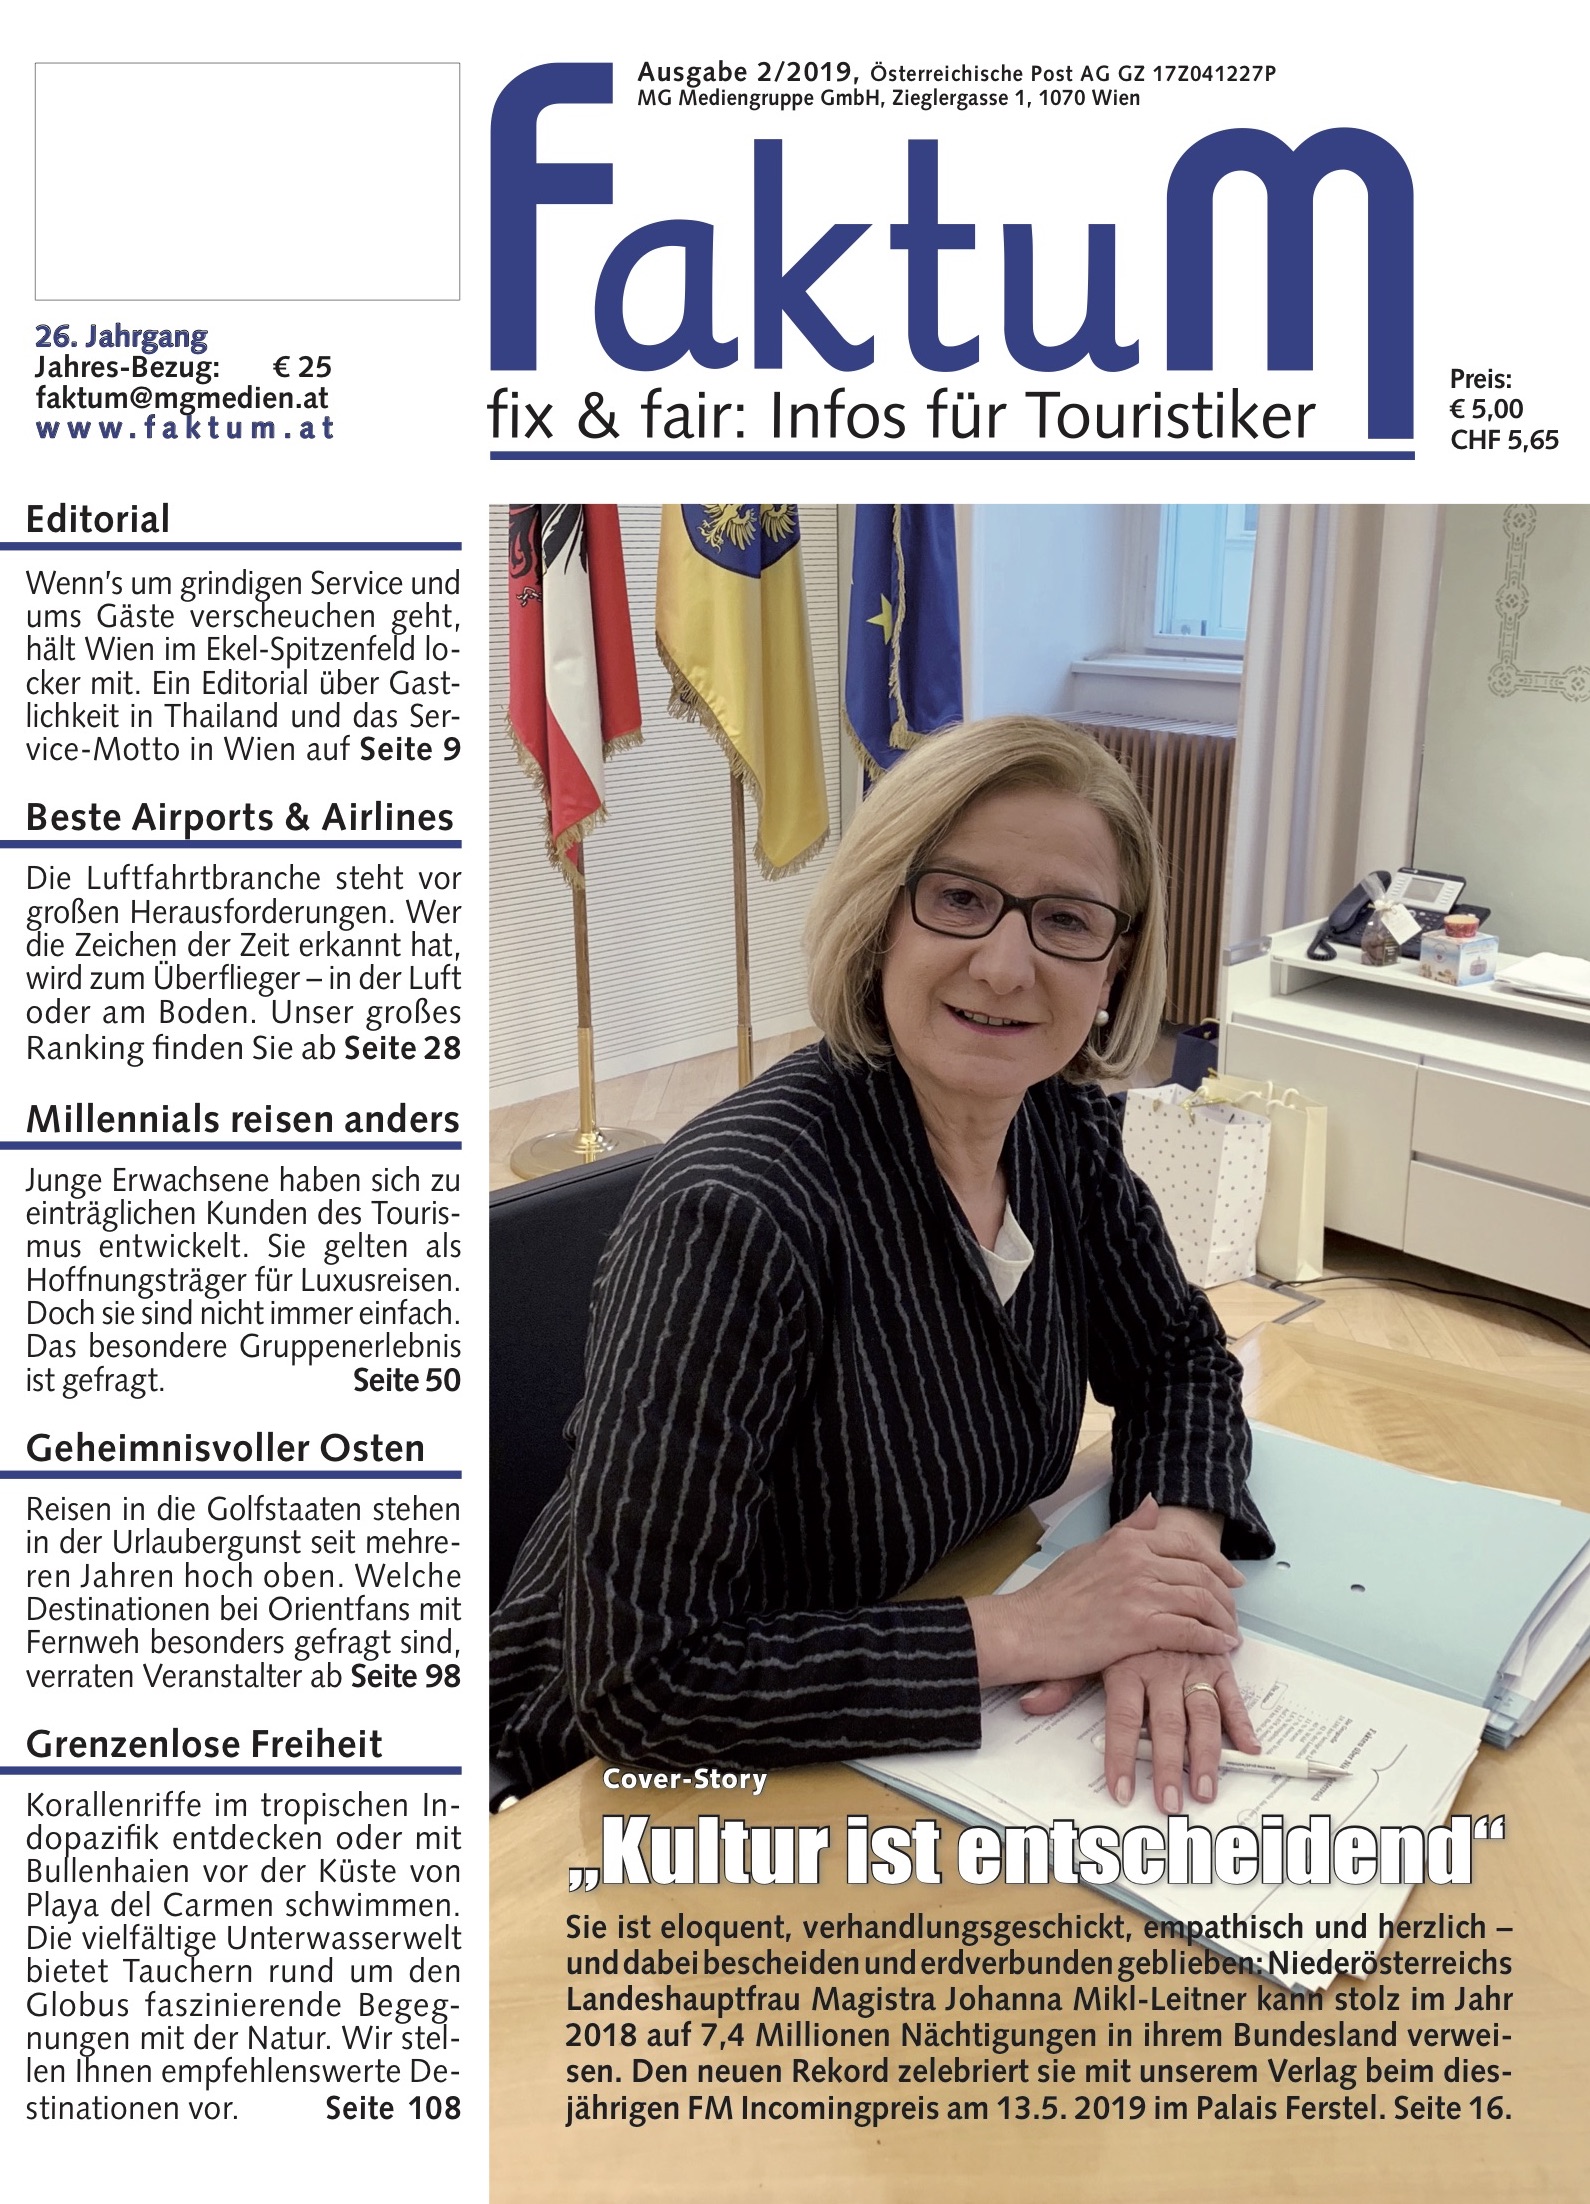 FaktuM 2/2019 Magazin Cover